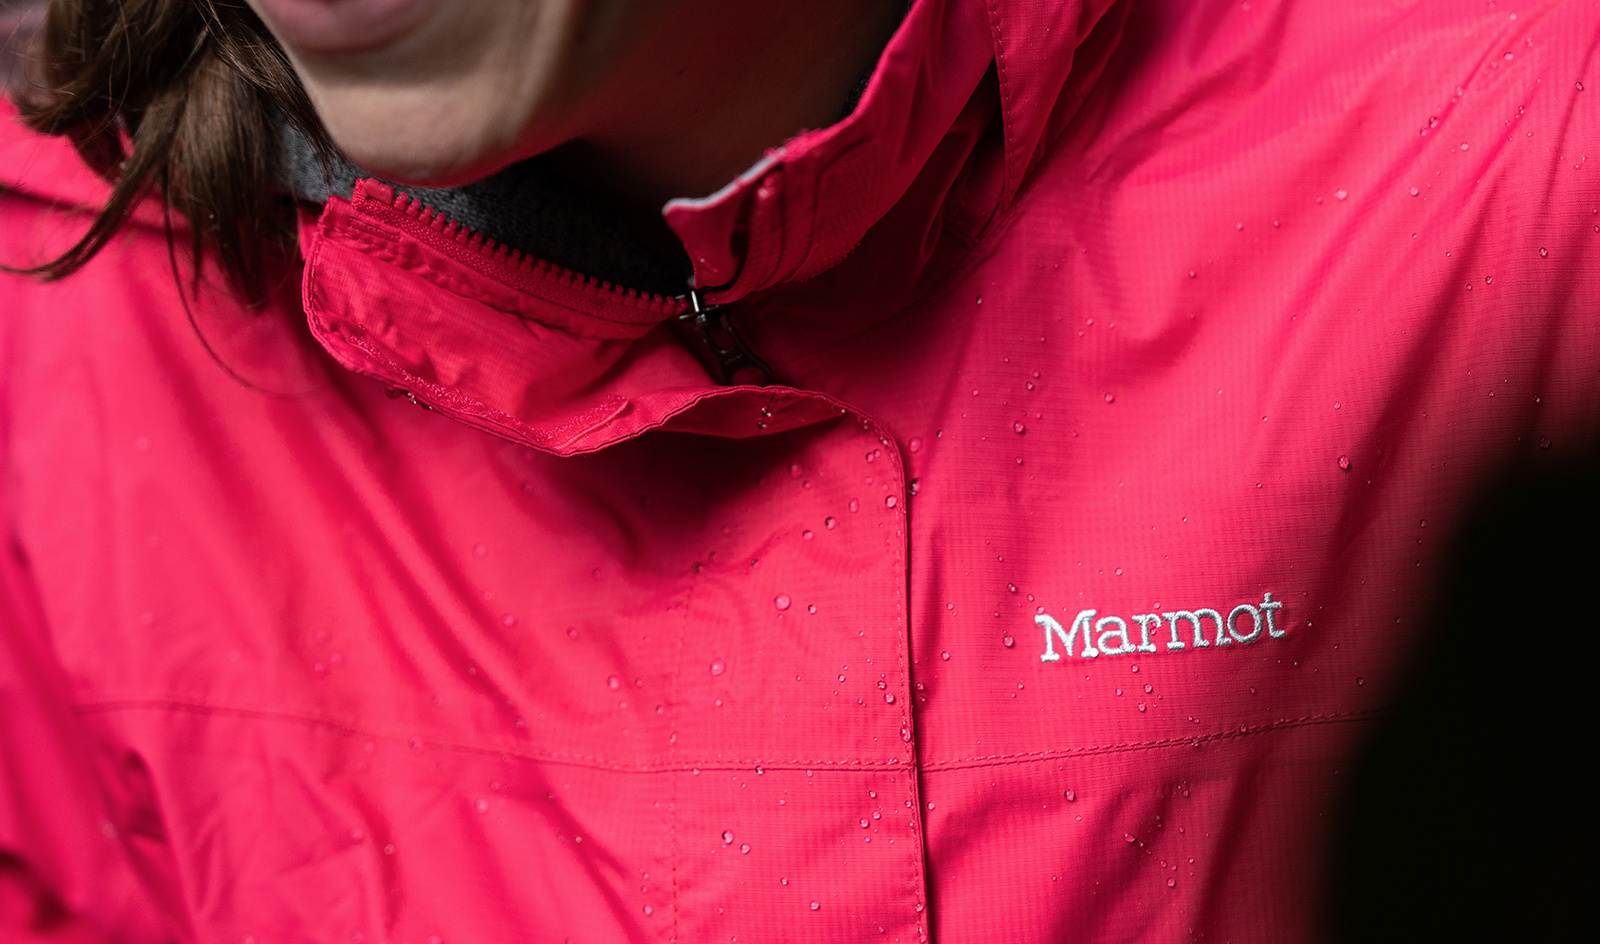 Marmot - Outdoor Clothing & Gear